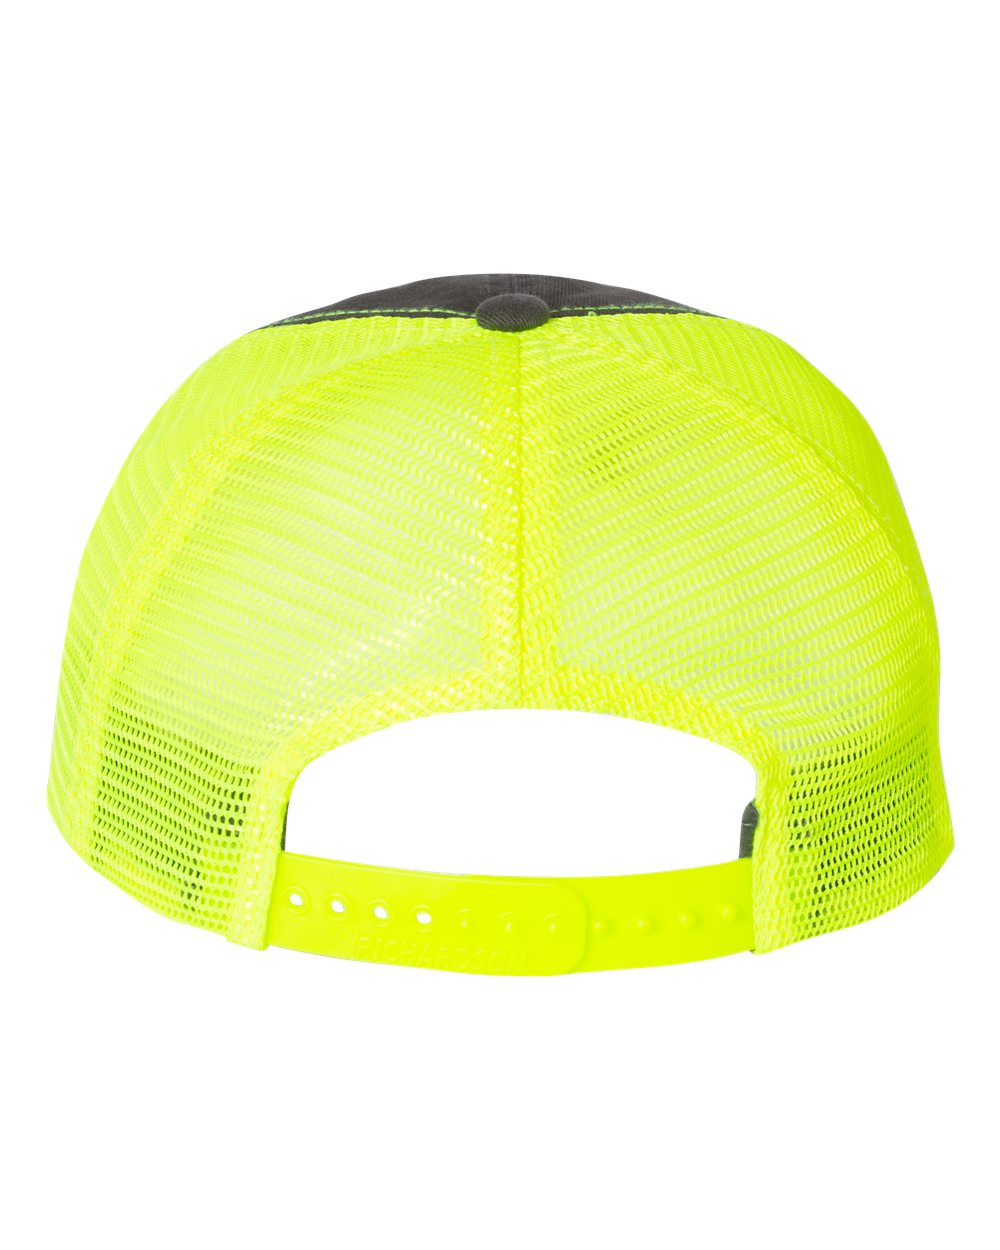 Richardson Garment-Washed Custom Trucker Caps, Charcoal Neon Yellow